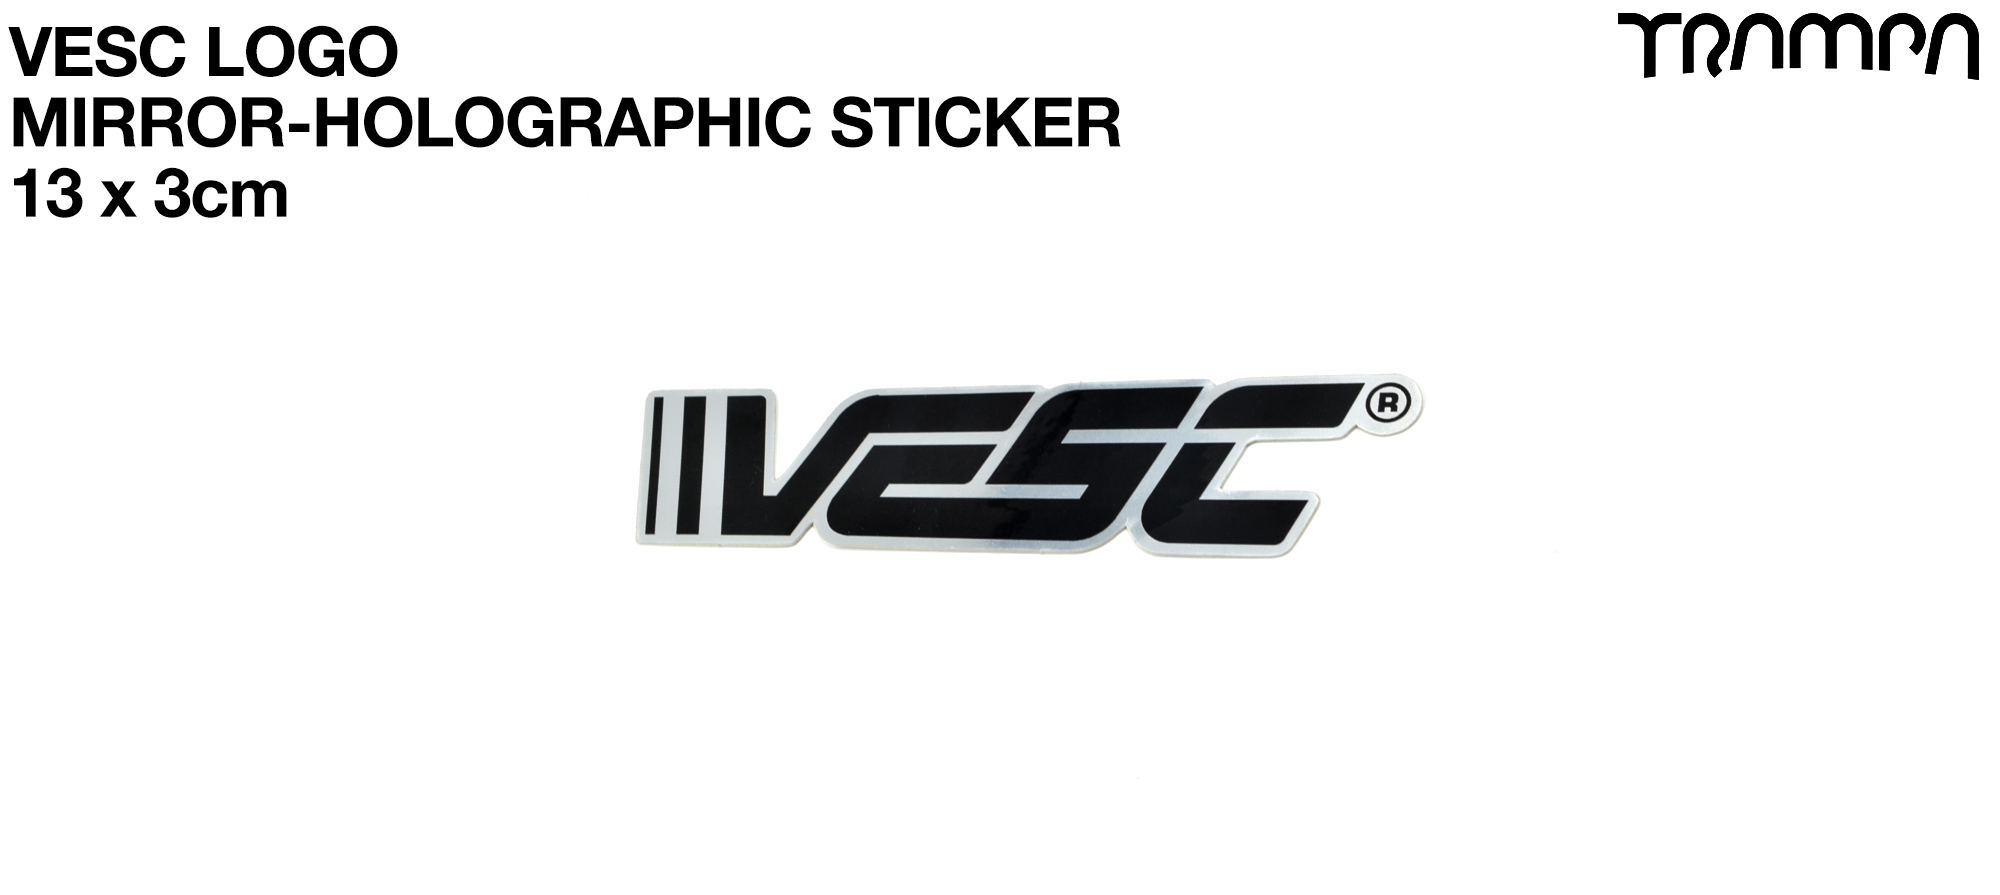 VESC Holographic Mirror Sticker - V2 